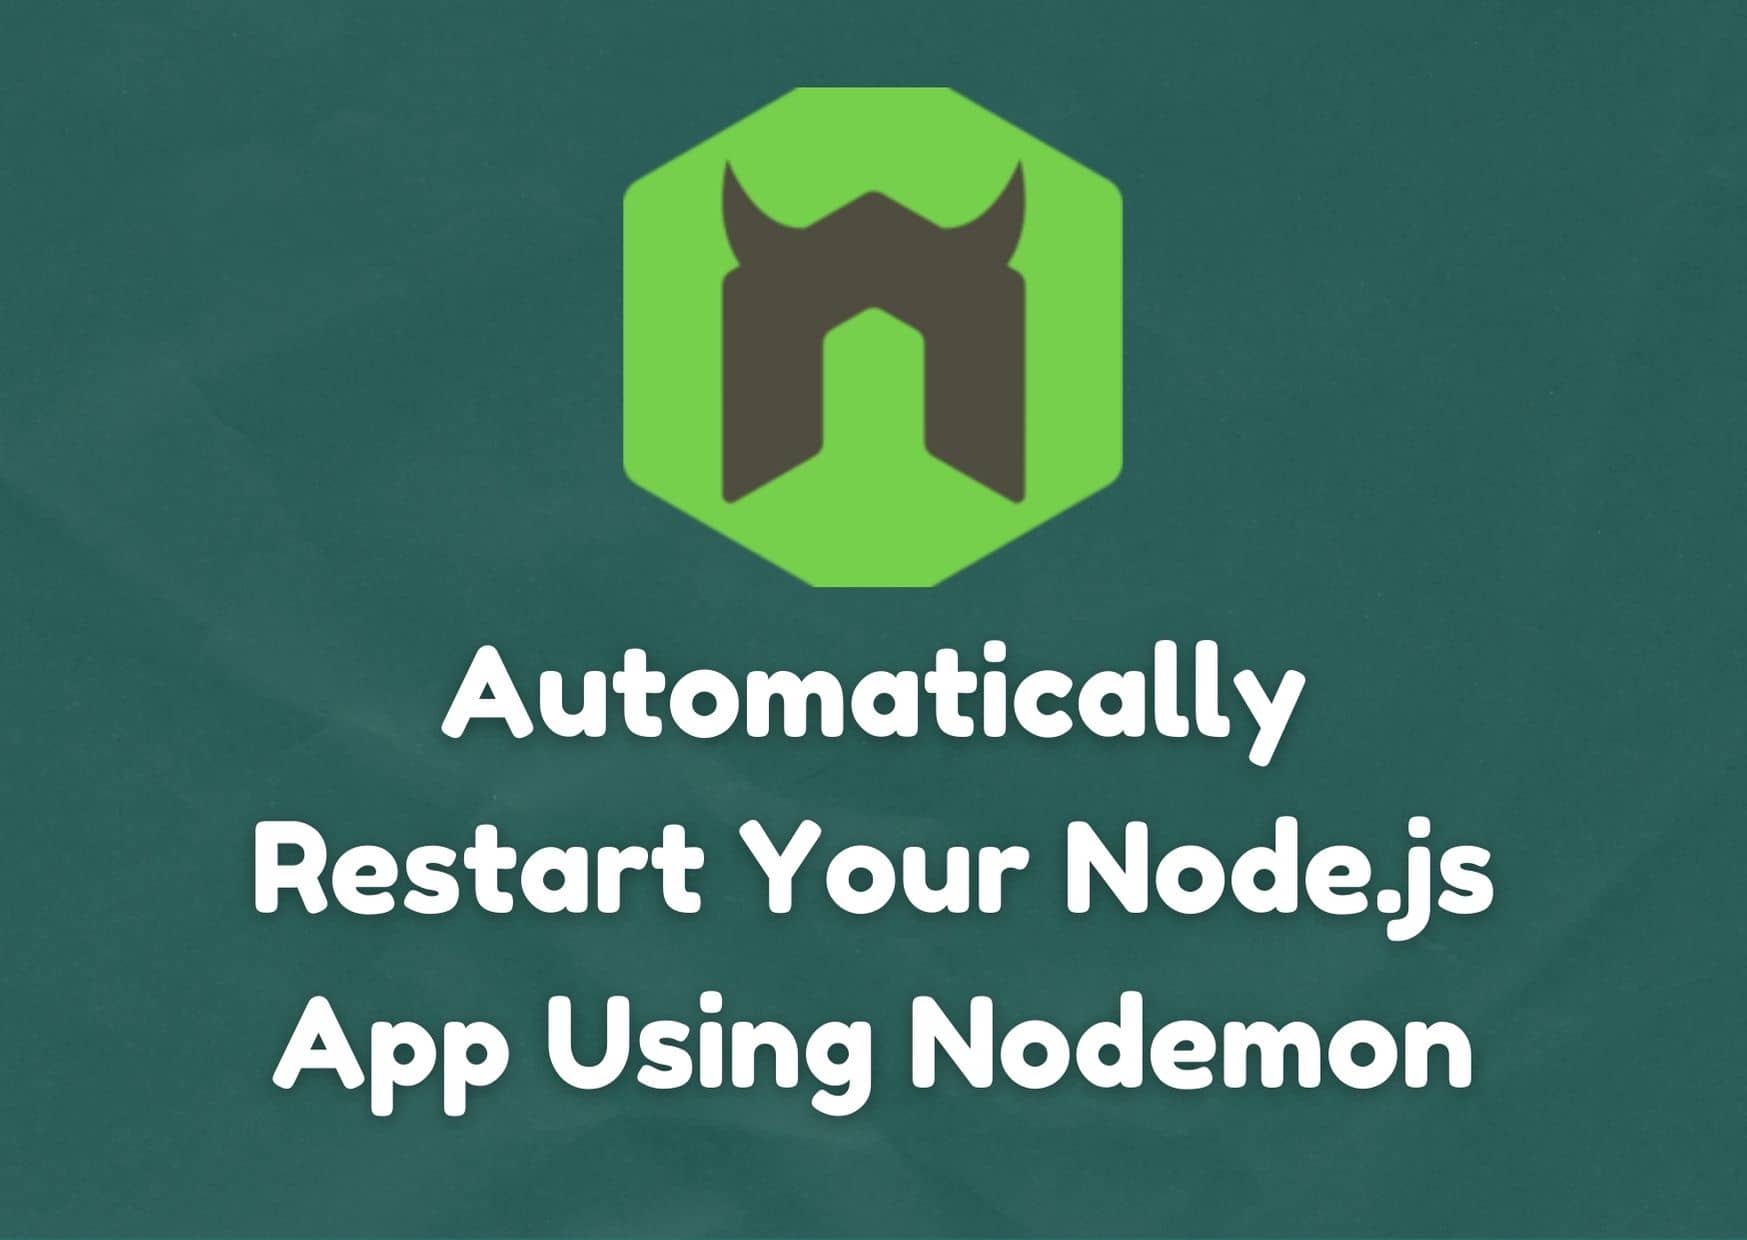 Automatically Restart Your Node.js App Using Nodemon - Step By Step